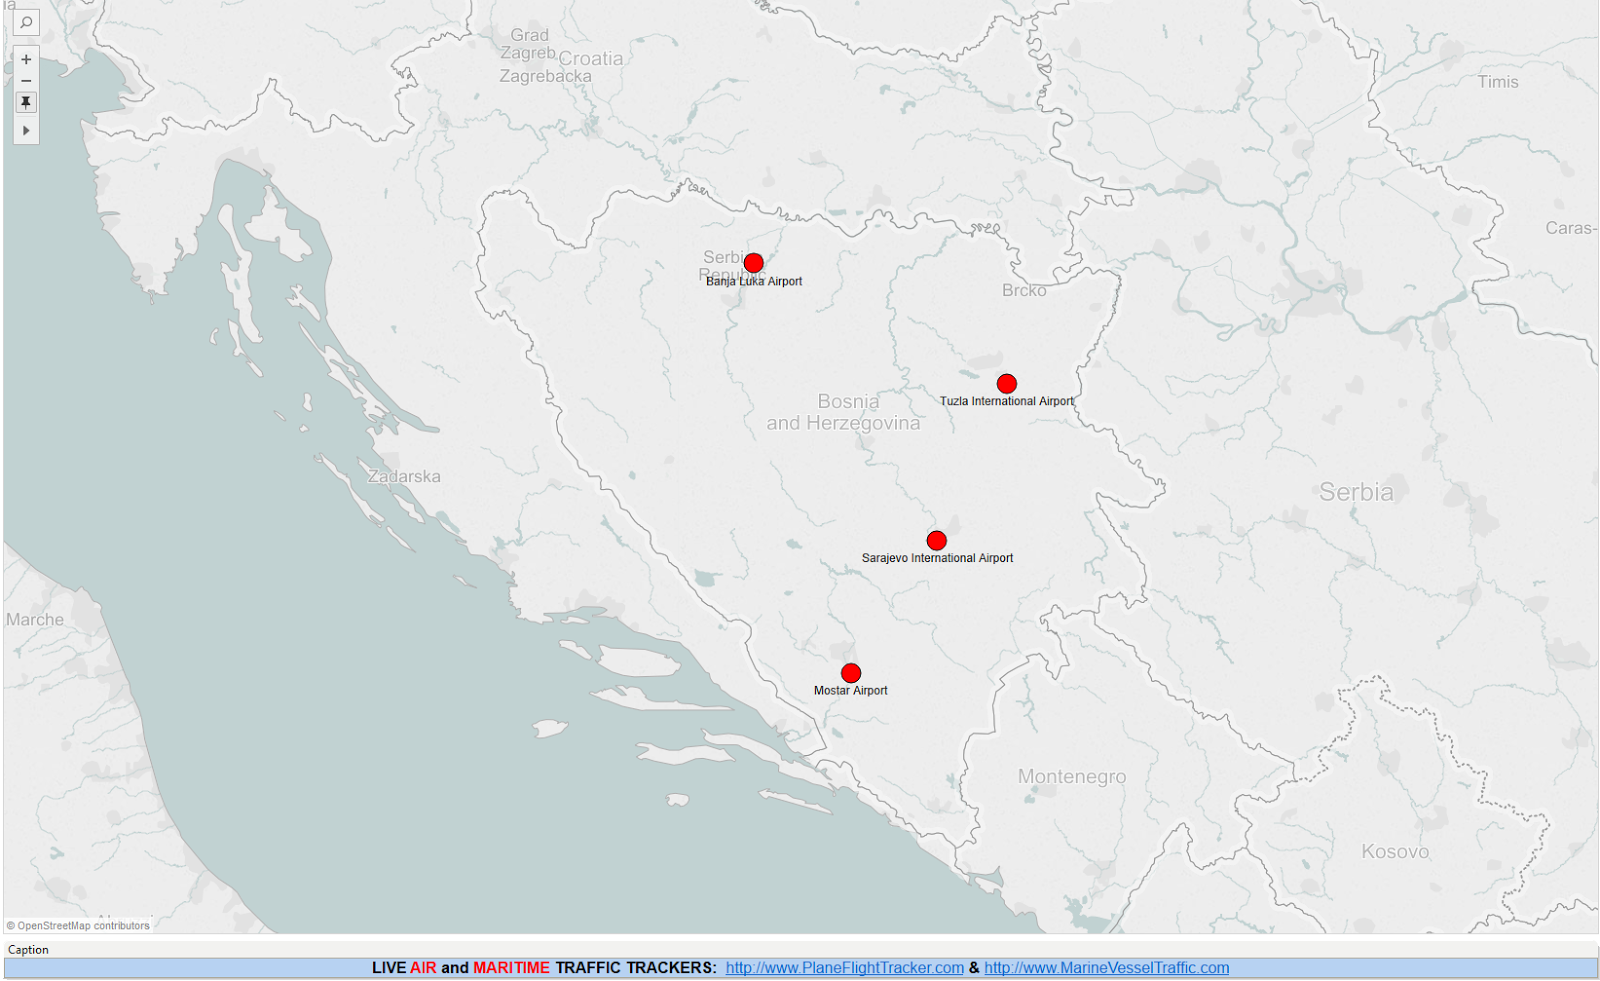 BOSNIA AND HERZEGOVINA AIRPORTS MAP